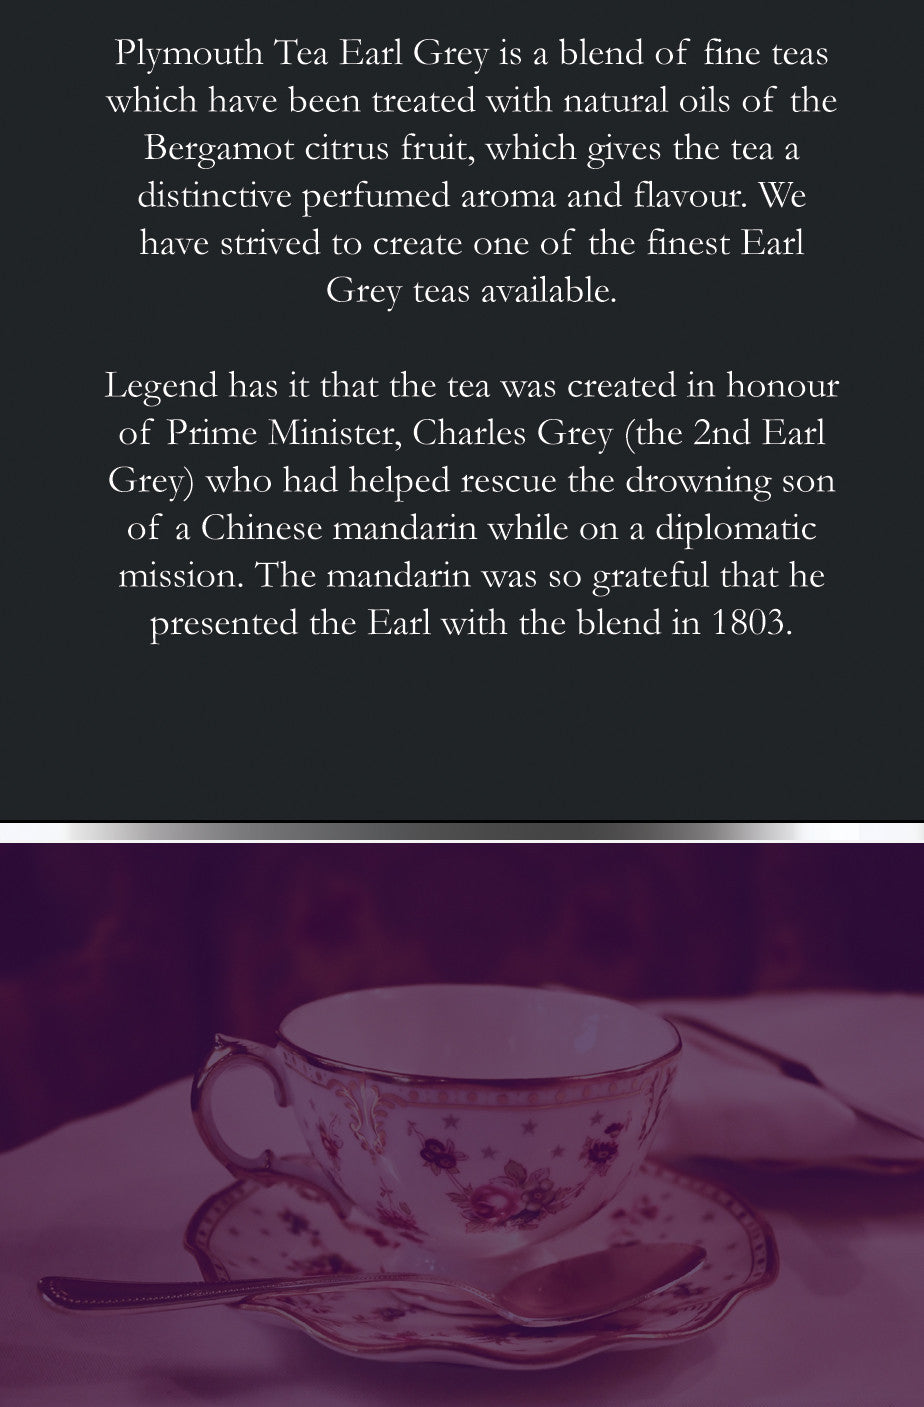 Plymouth Tea - Luxury Tea - Earl Grey Tea - Bagside